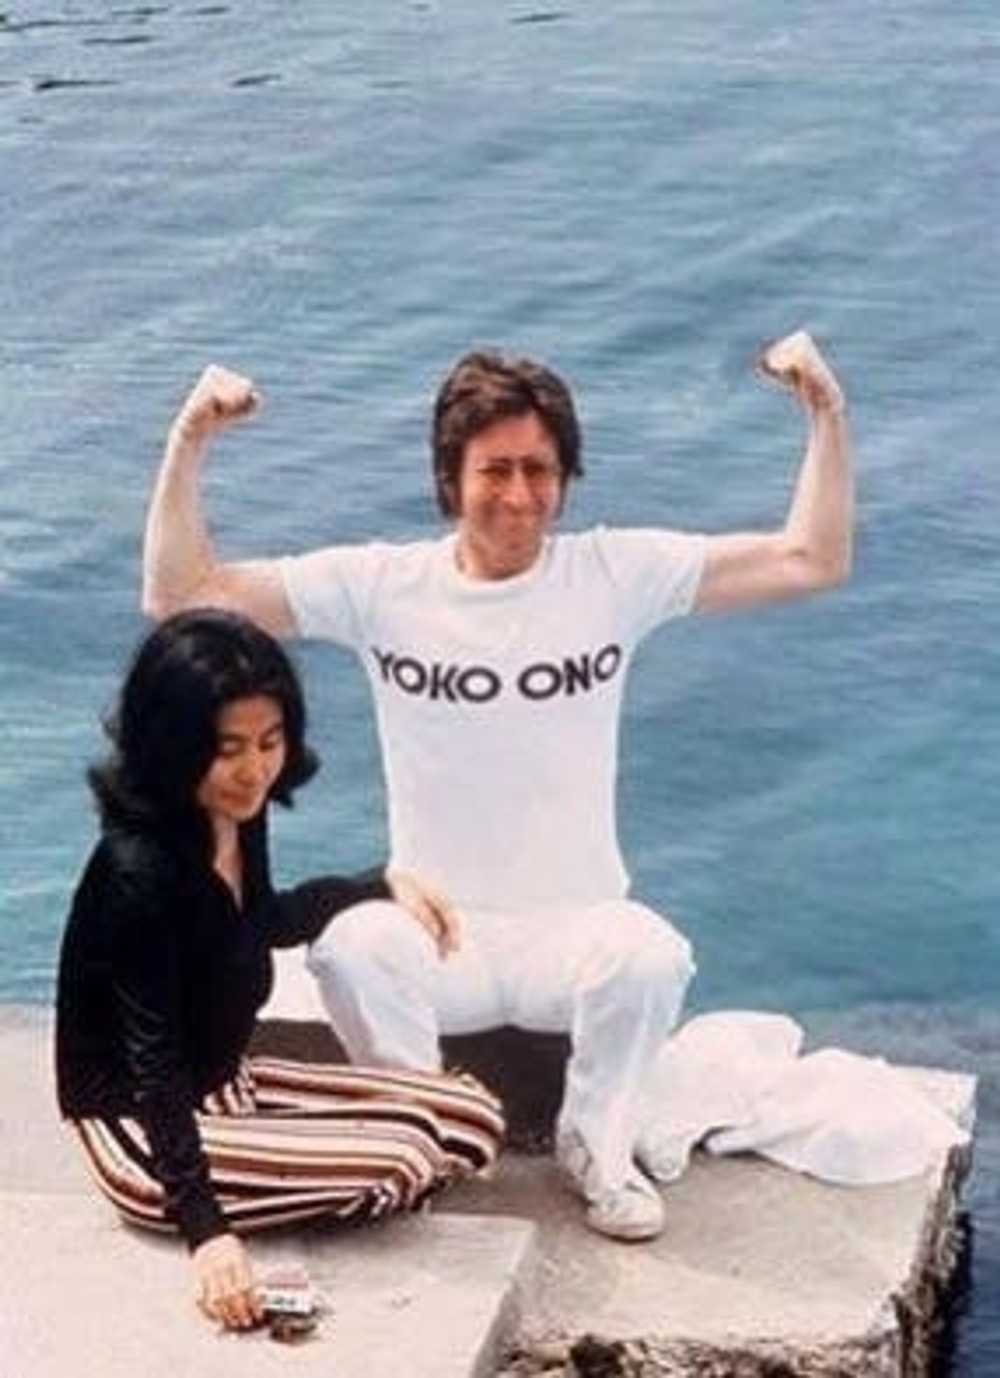 Canvas Yoko Ono t shirt - image 2